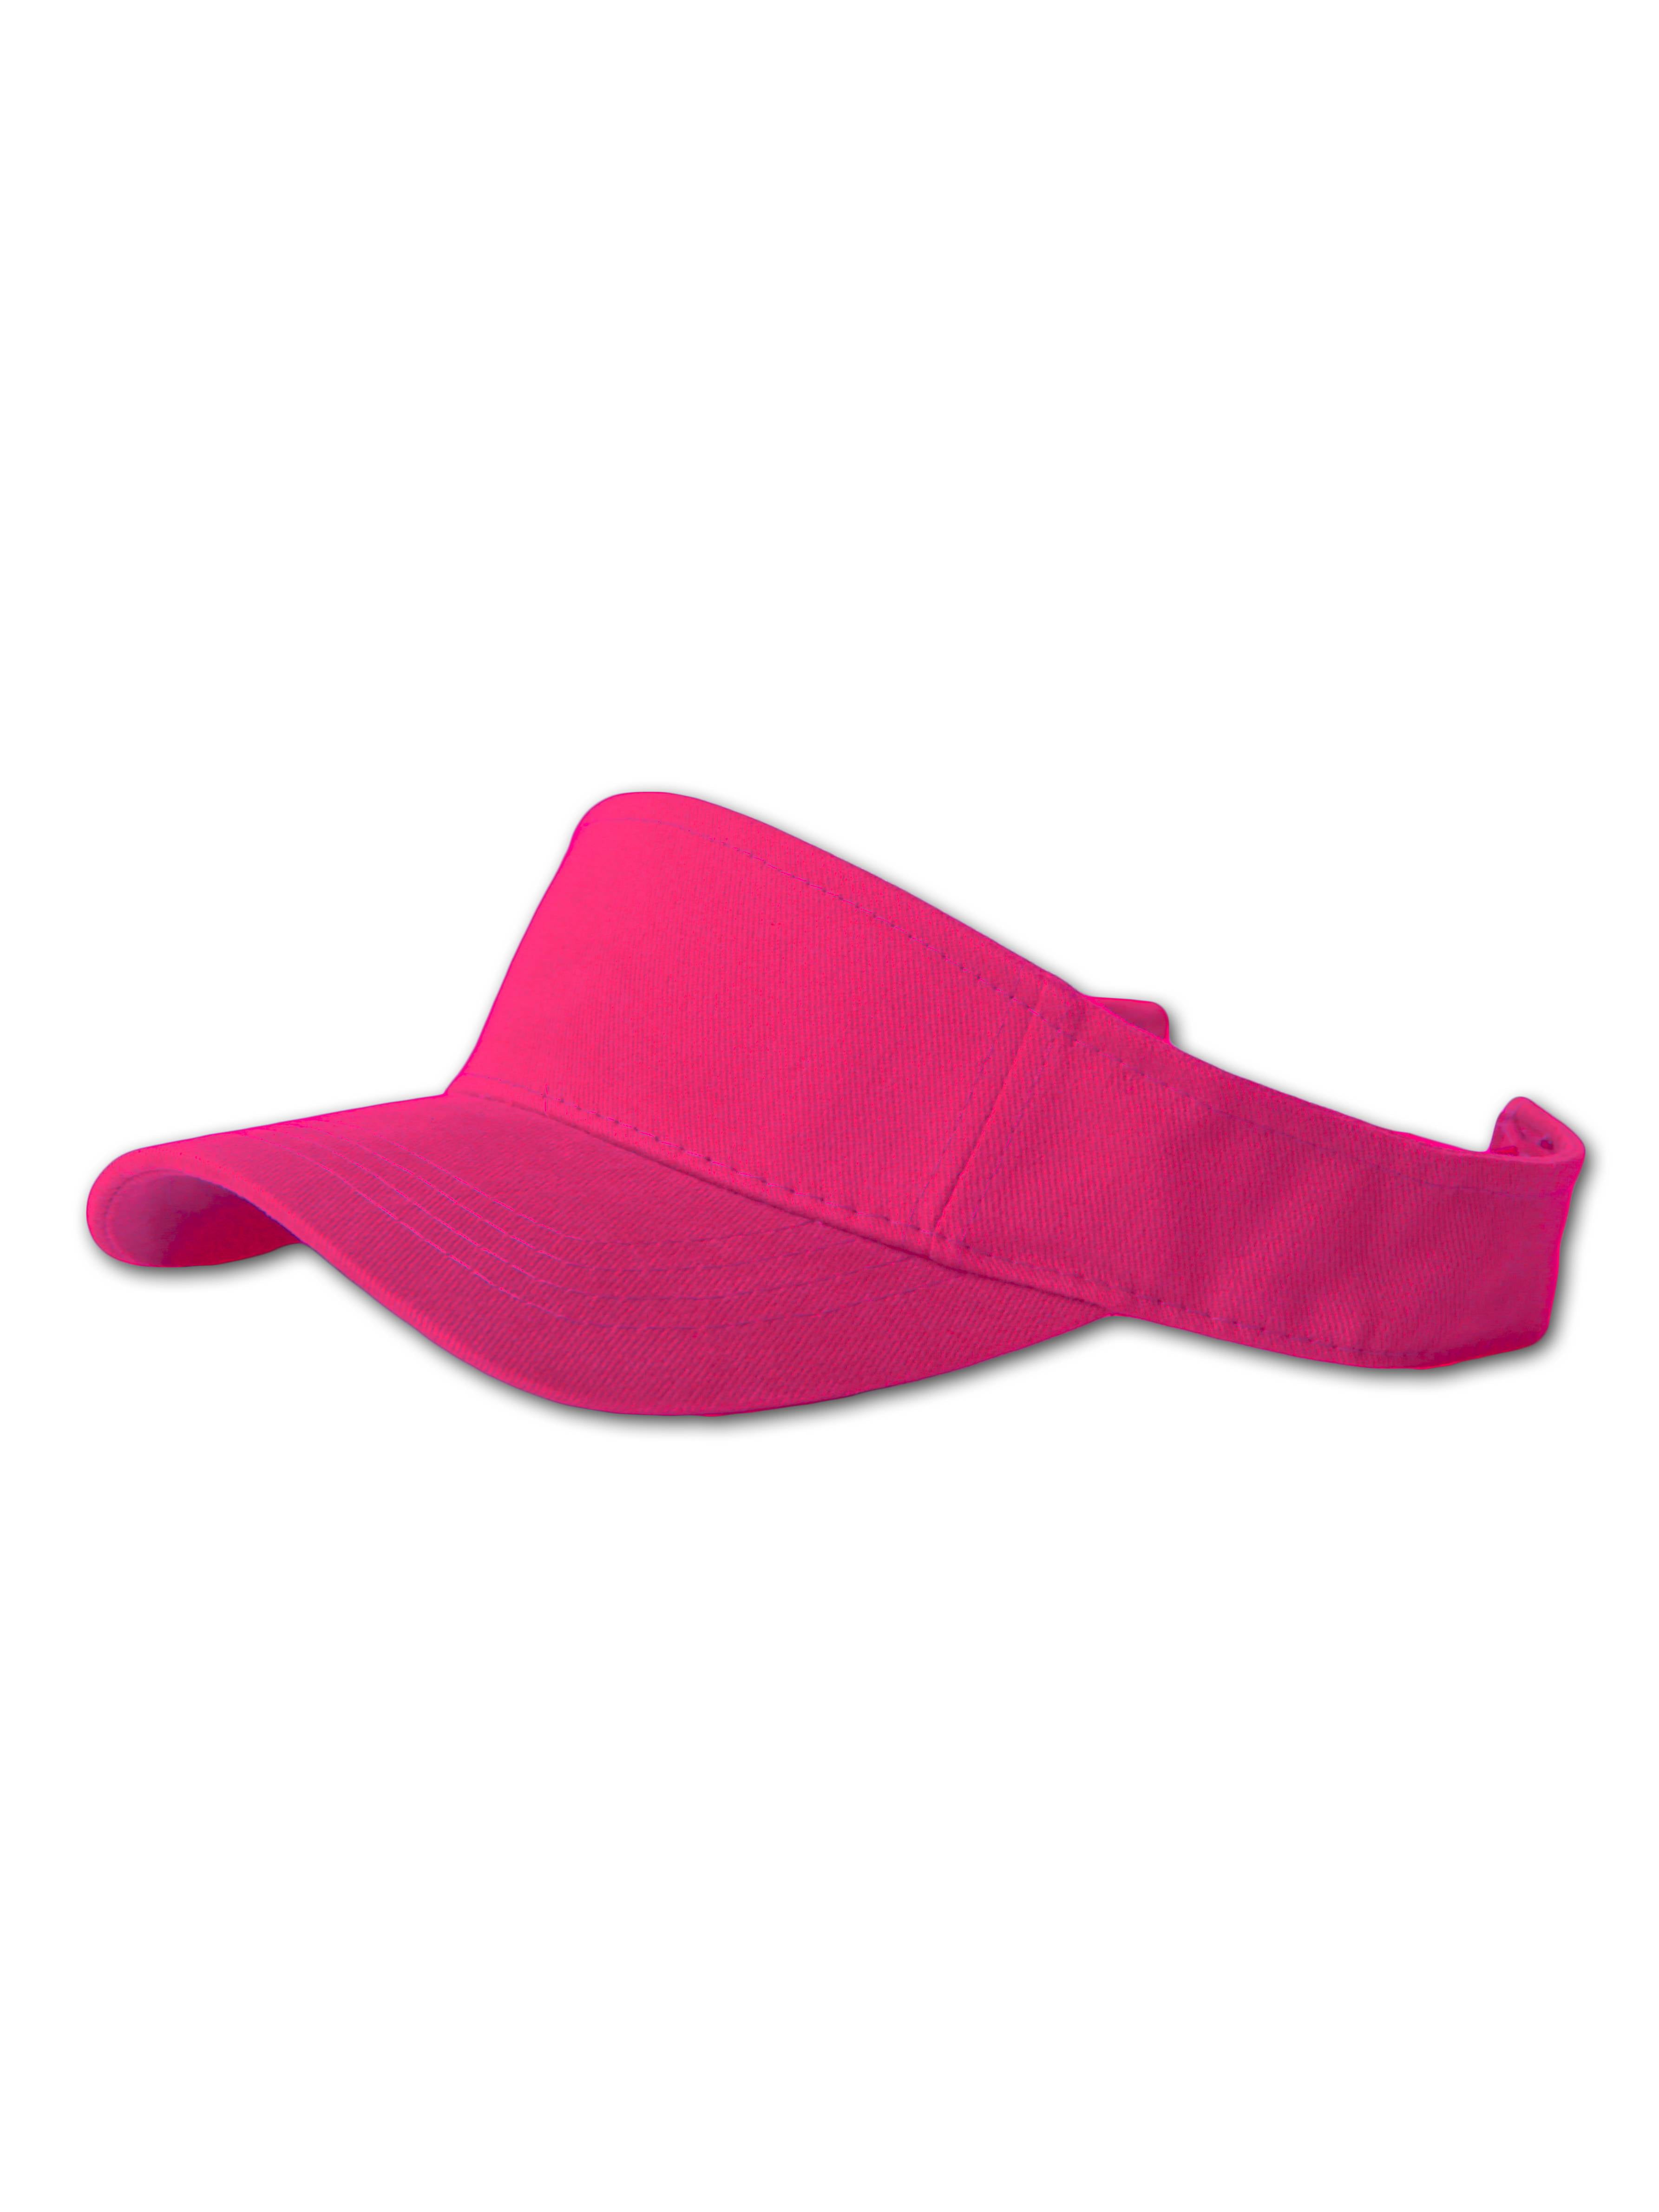 Buff Unisex Reflective HTR Sports Adjustable Running Visor Cap Hat Pink 